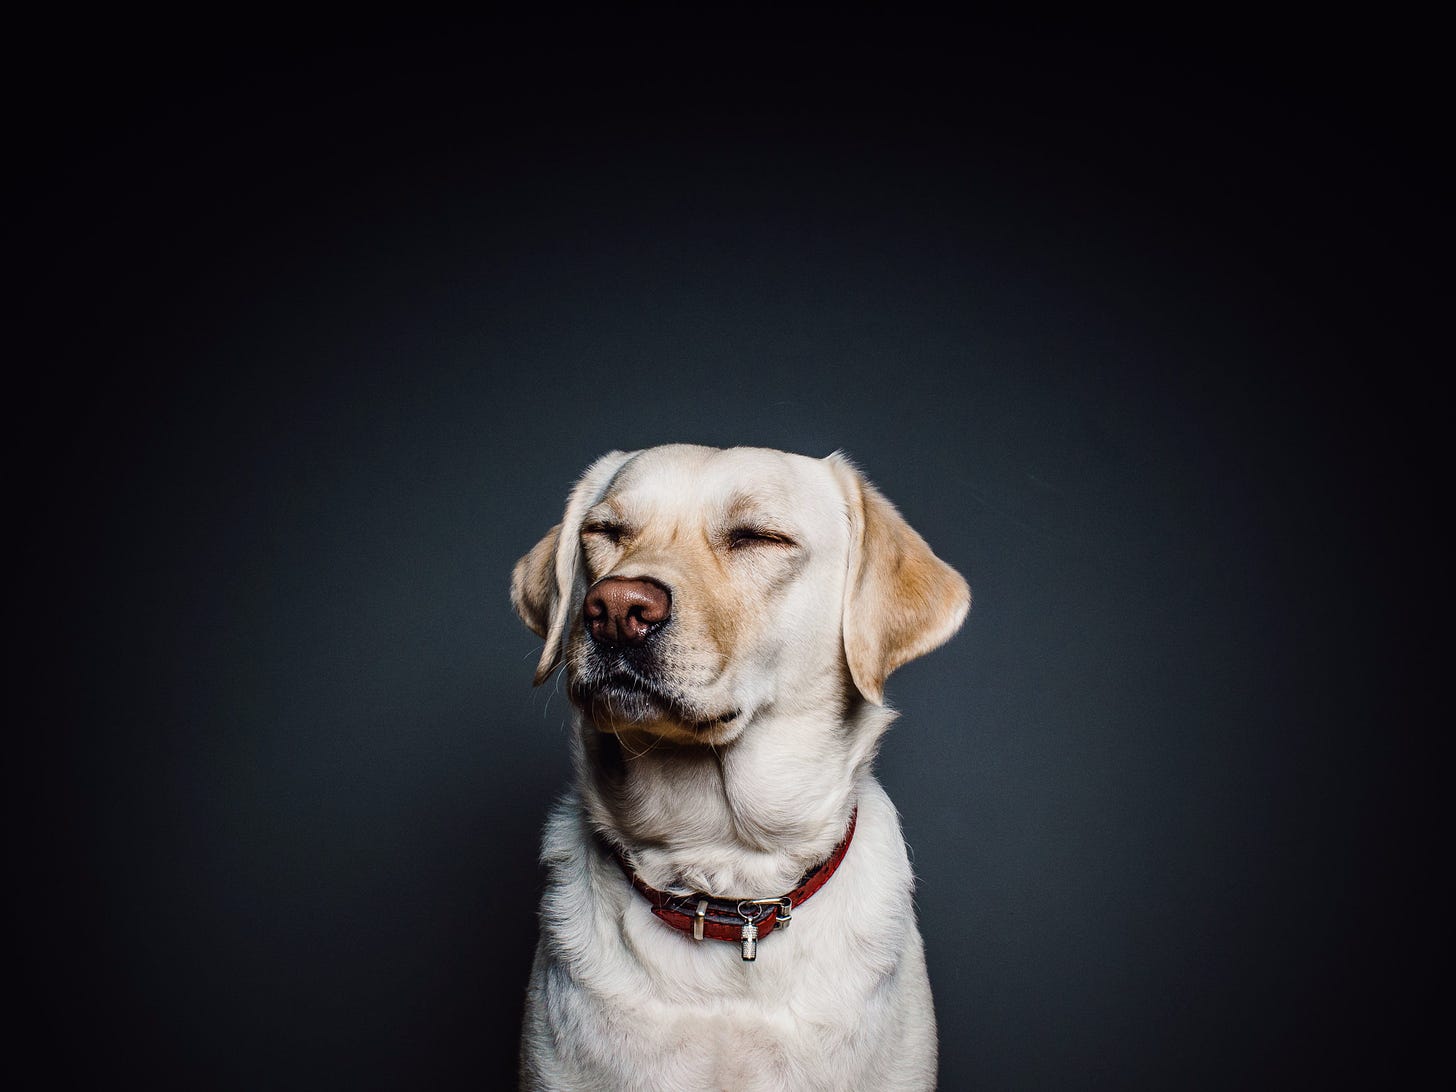 Dog images · Pexels · Free Stock Photos